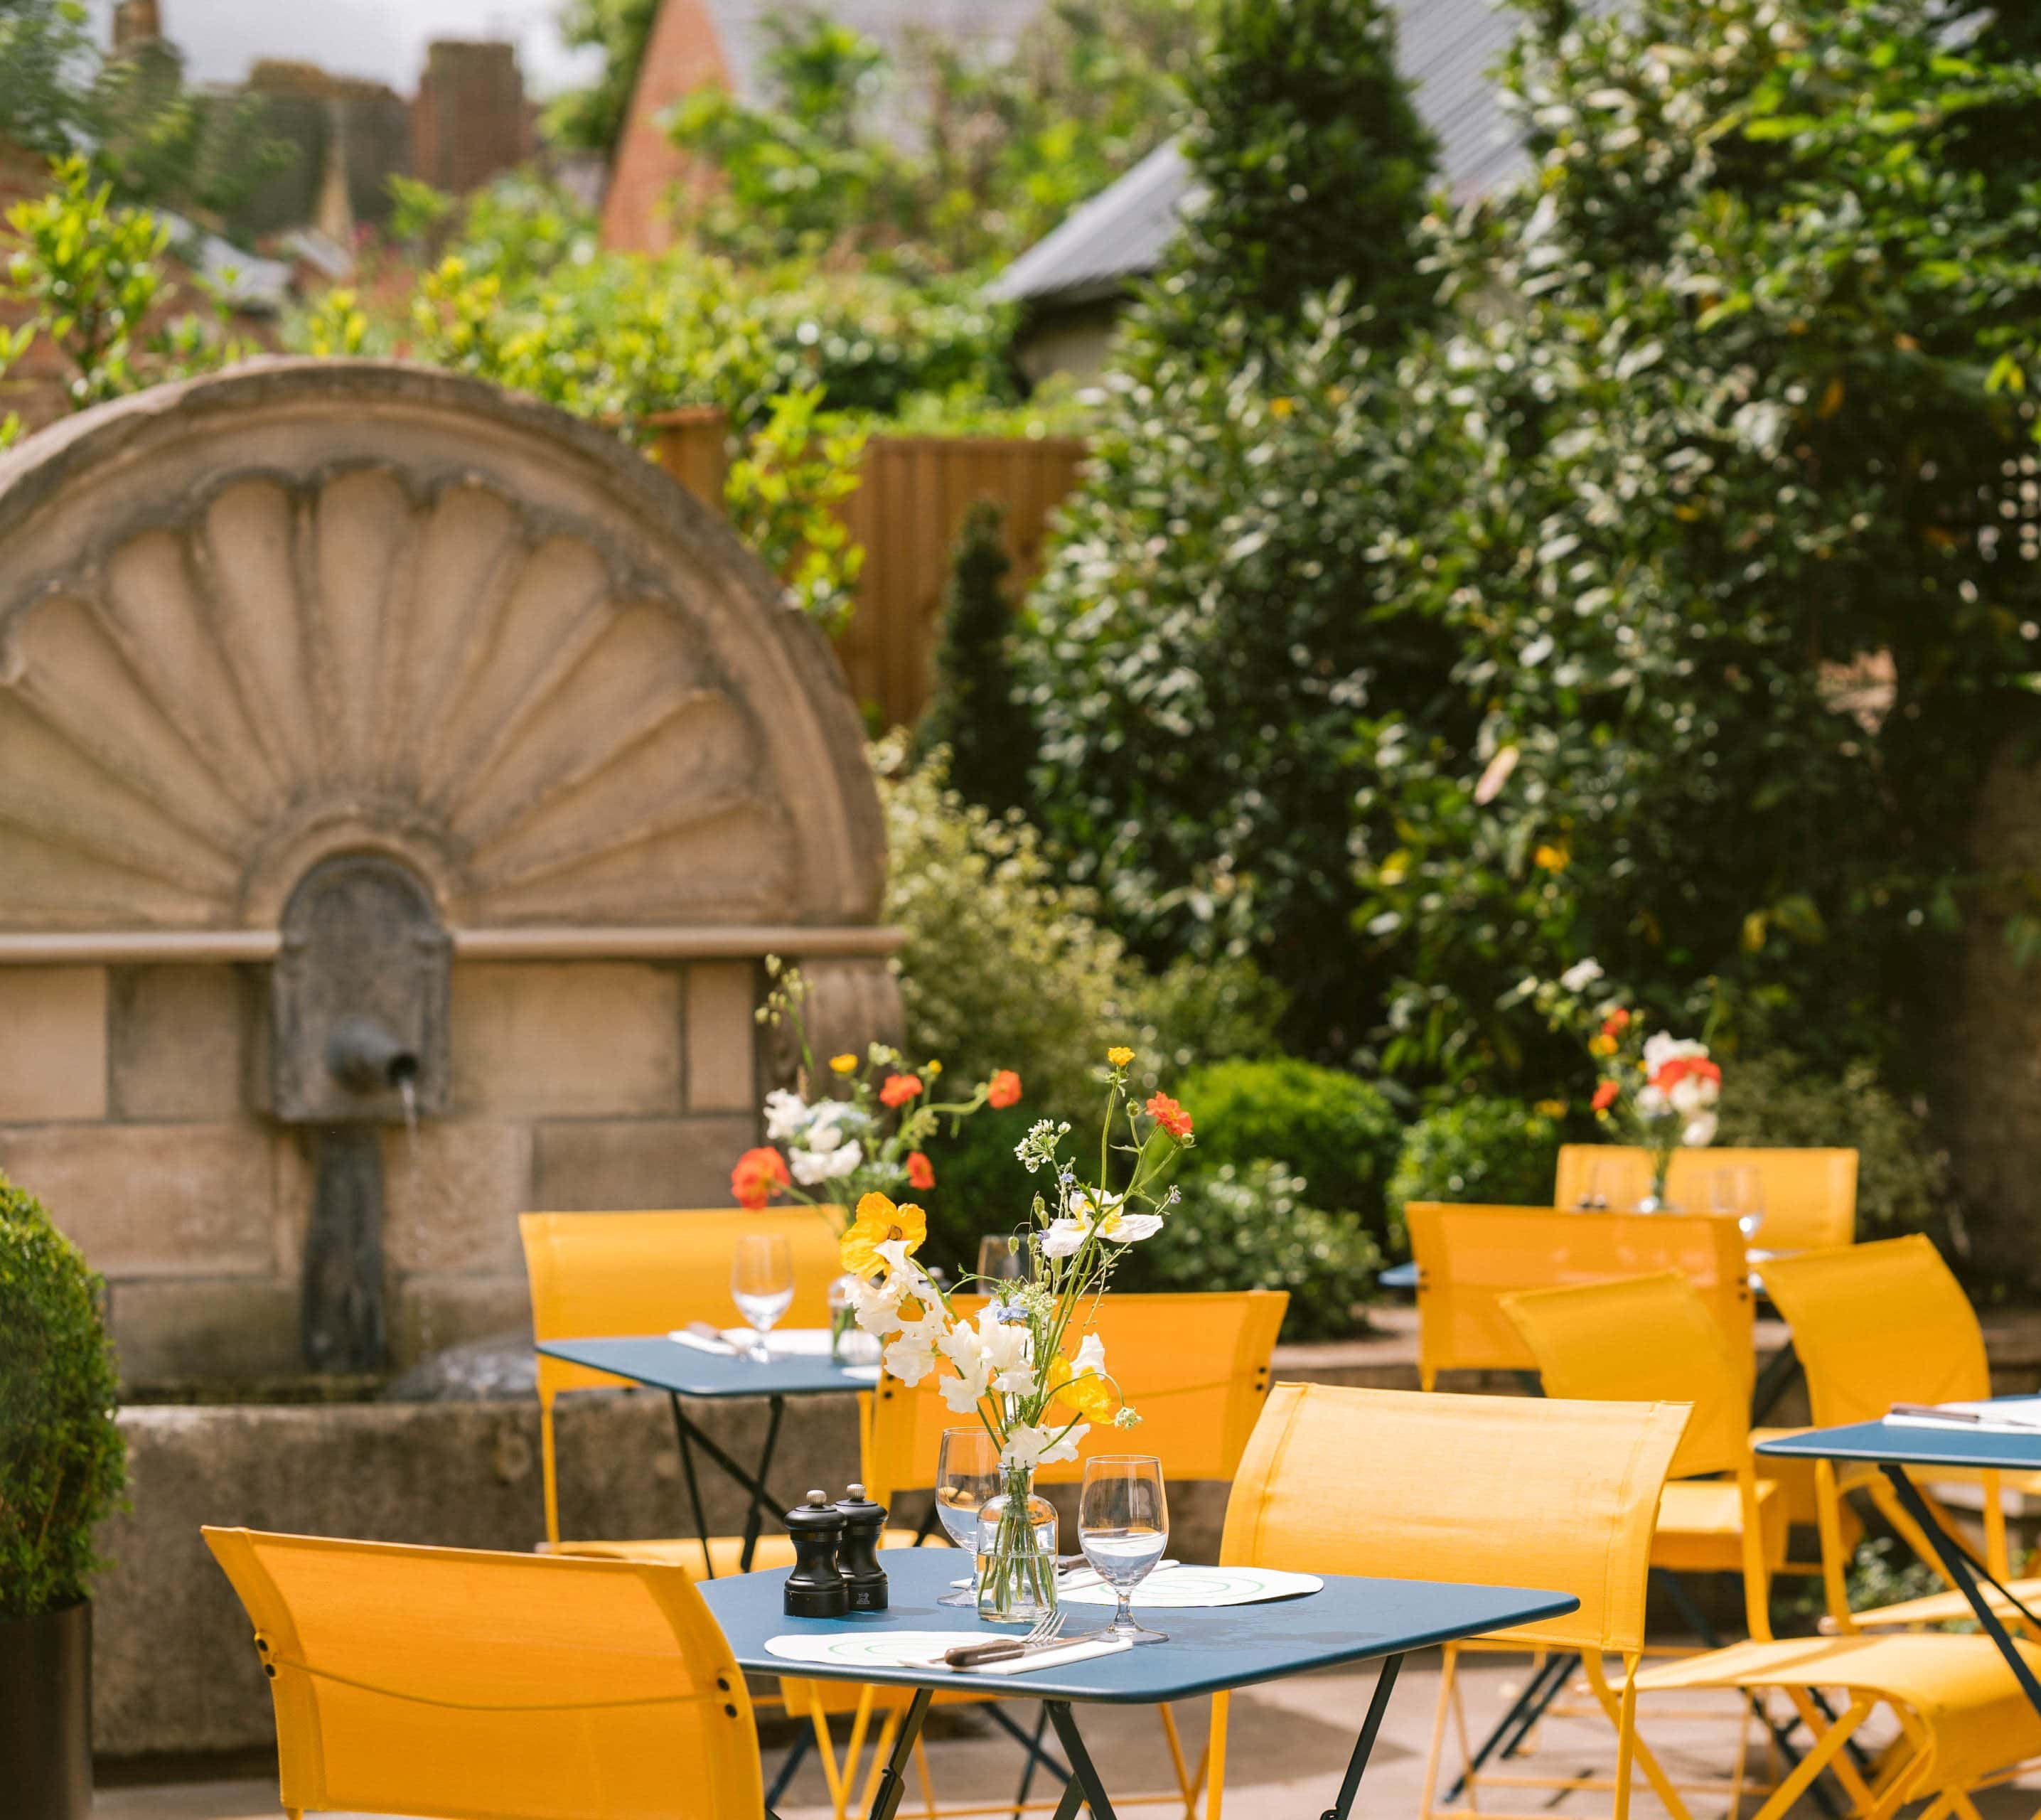 10-2022-Gees-Restaurant-Bar-Oxford-High-res-Secret-Garden-Terrace-Seating-Web-Hero-aspect-ratio-2871-2560